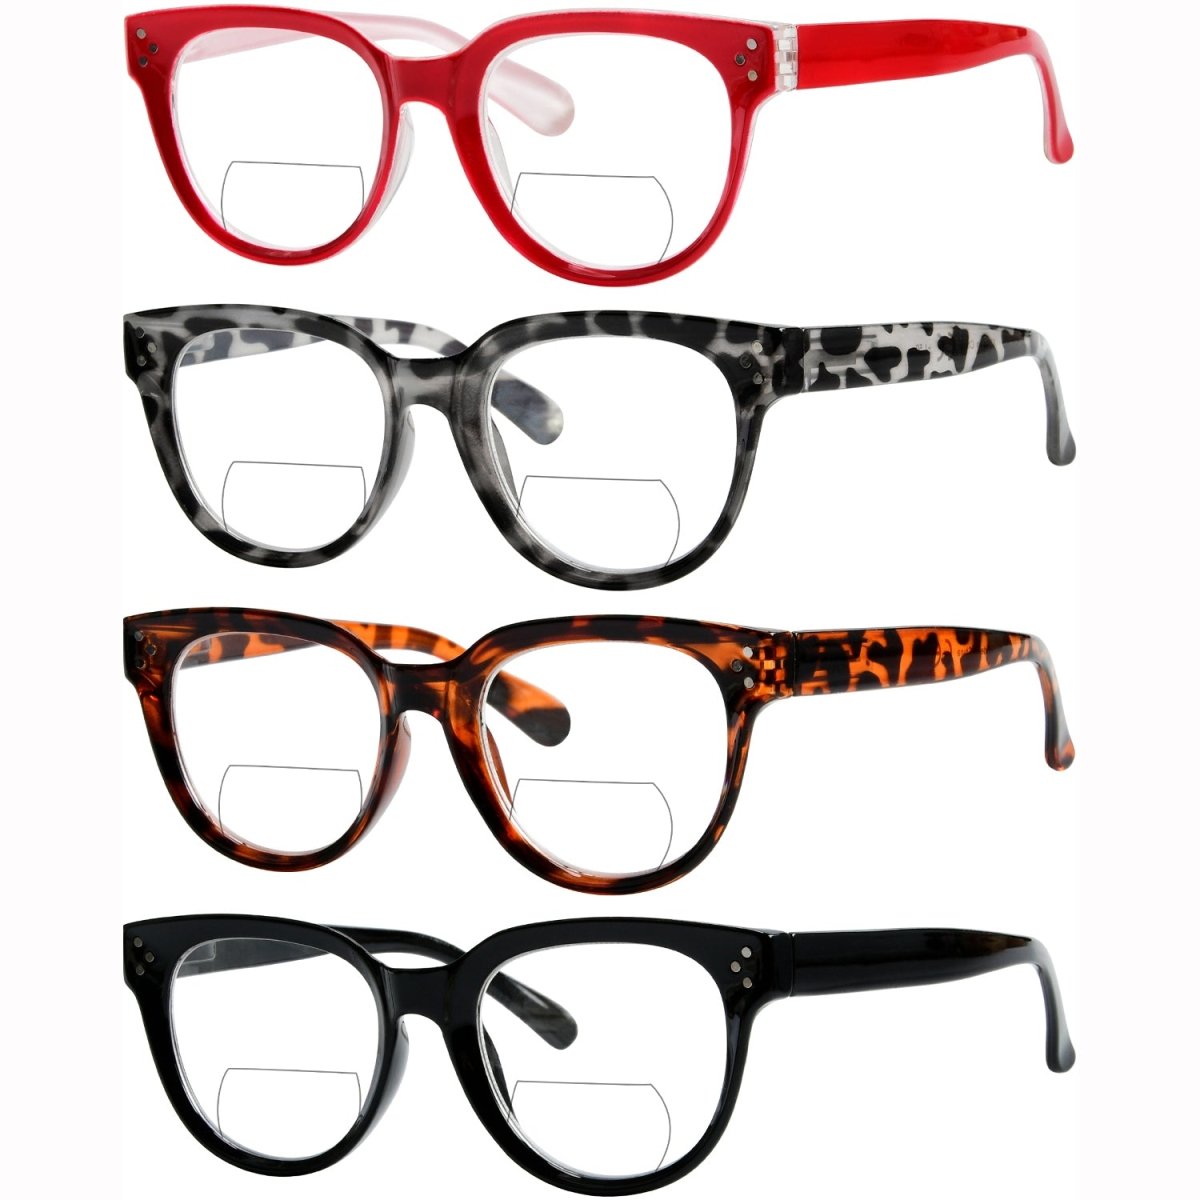 4 Pack Stylish Thicker Frame Bifocal Reading Glasses BR9110eyekeeper.com